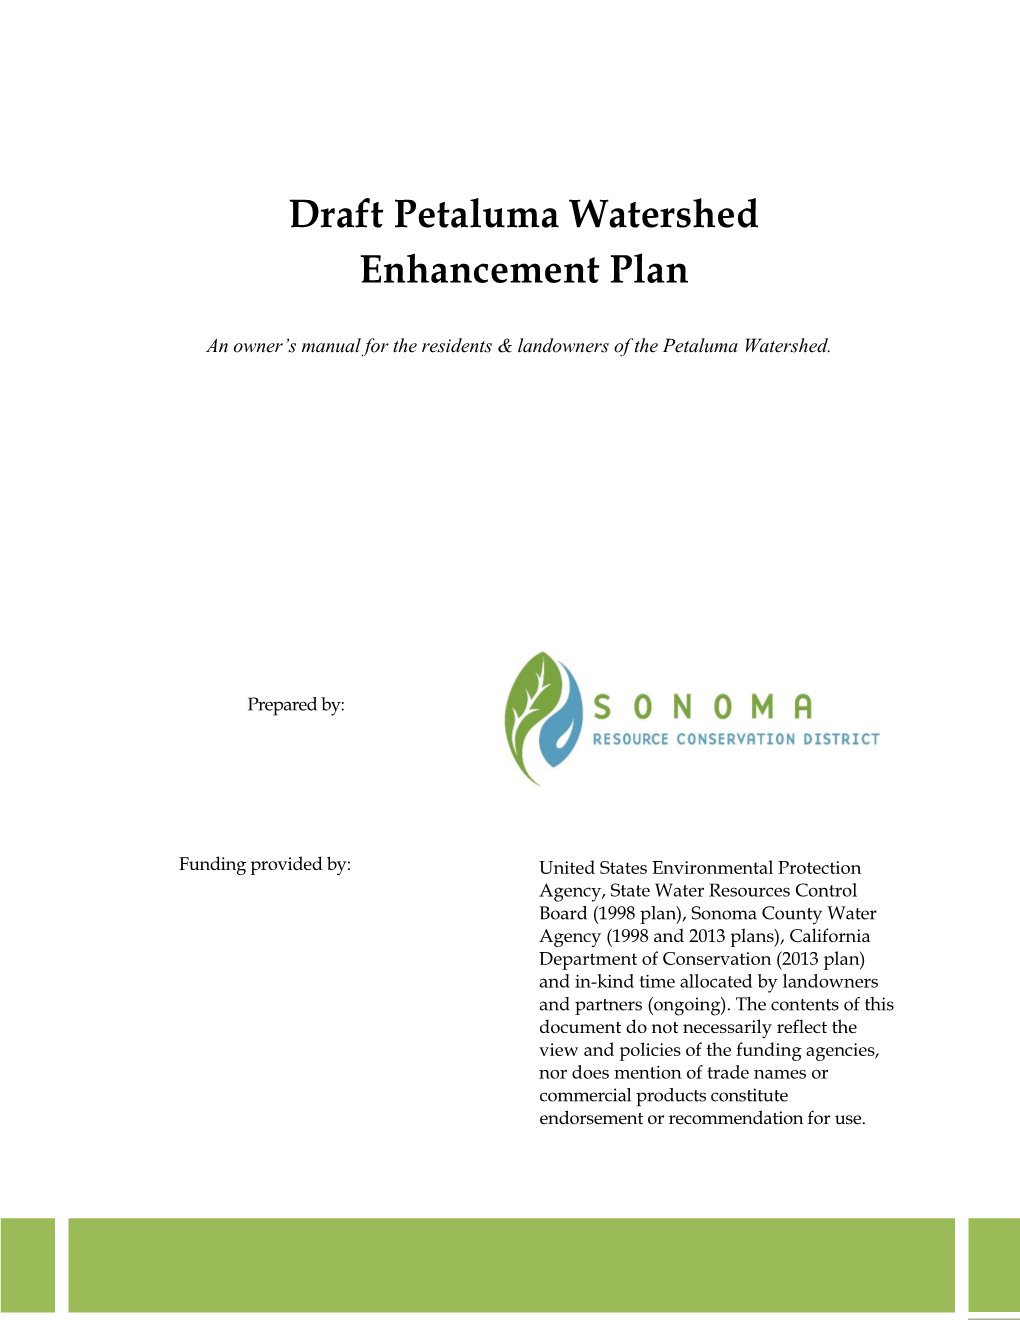 Draft Petaluma Watershed Enhancement Plan